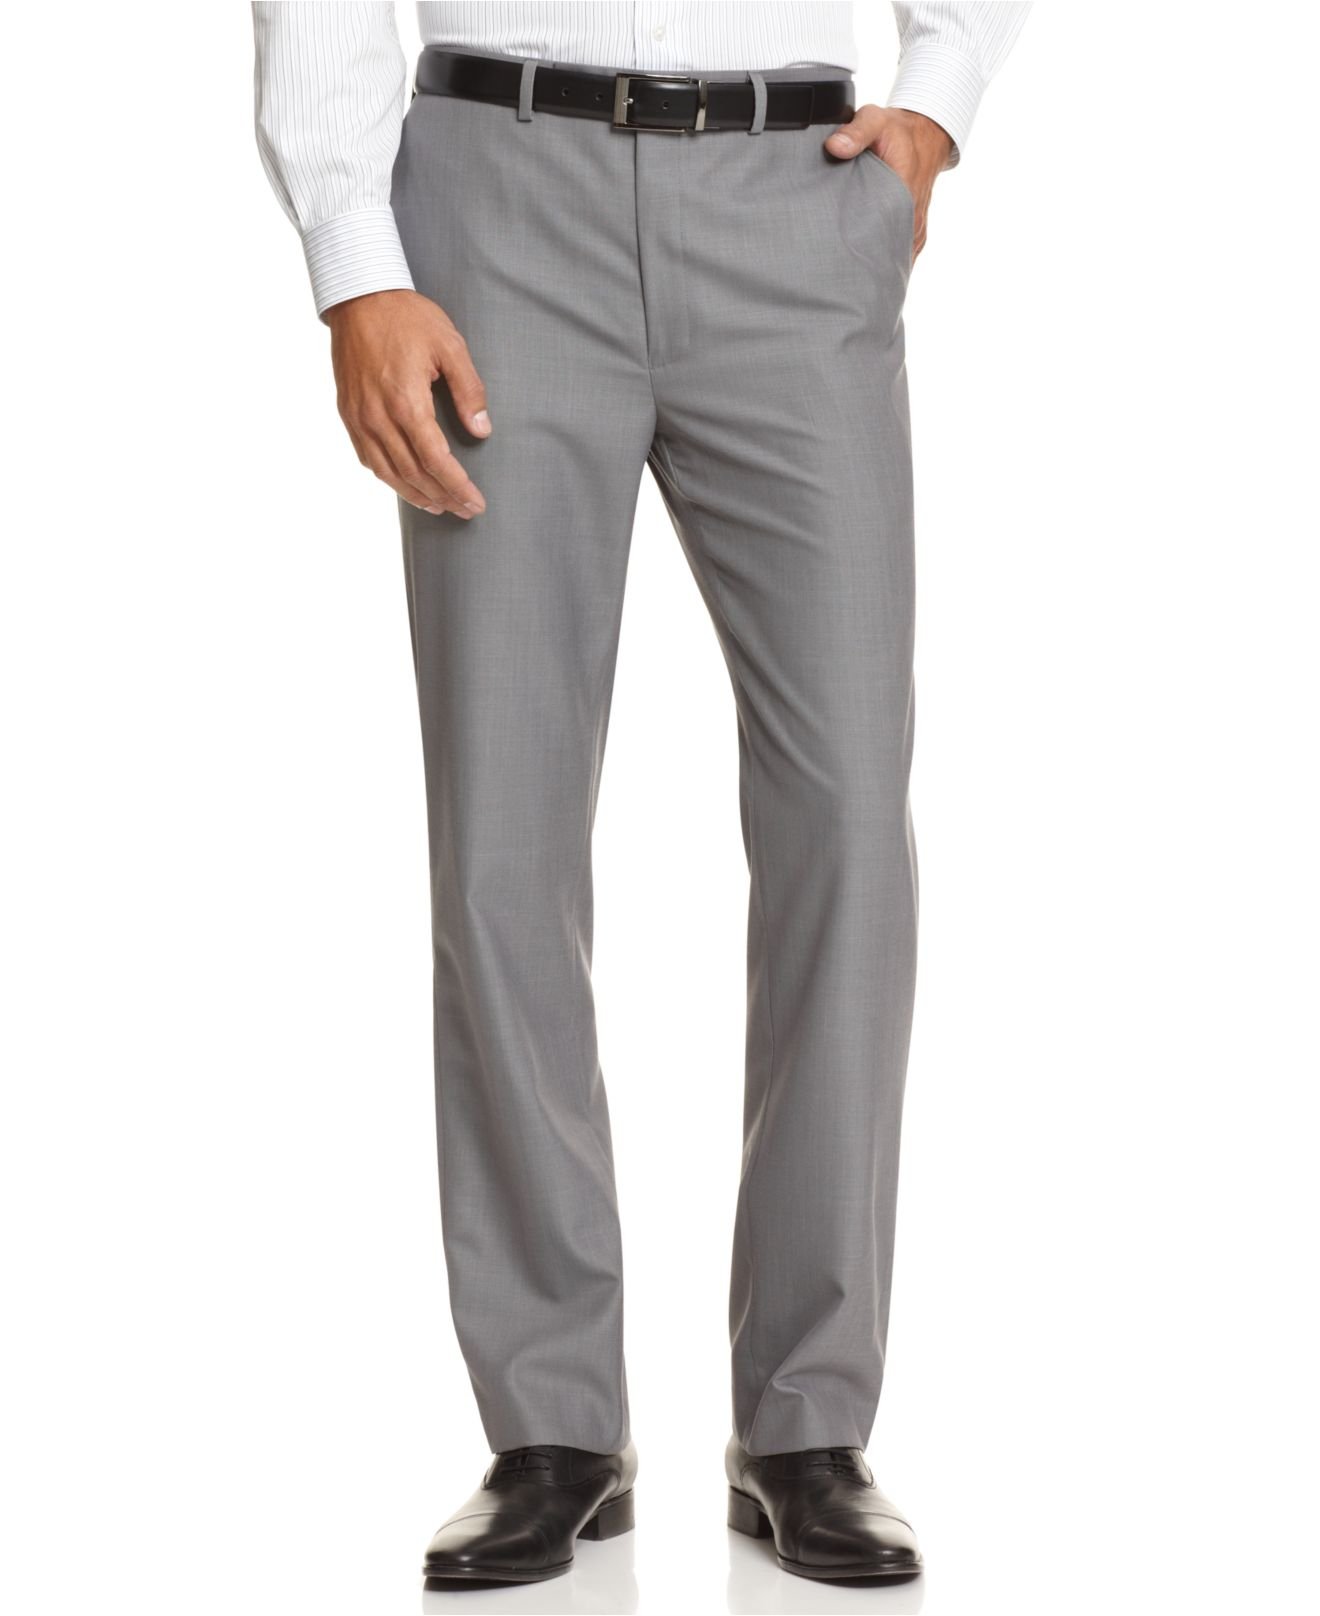 Calvin Klein Body Slim-Fit Sharkskin Dress Pants in Gray for Men - Lyst